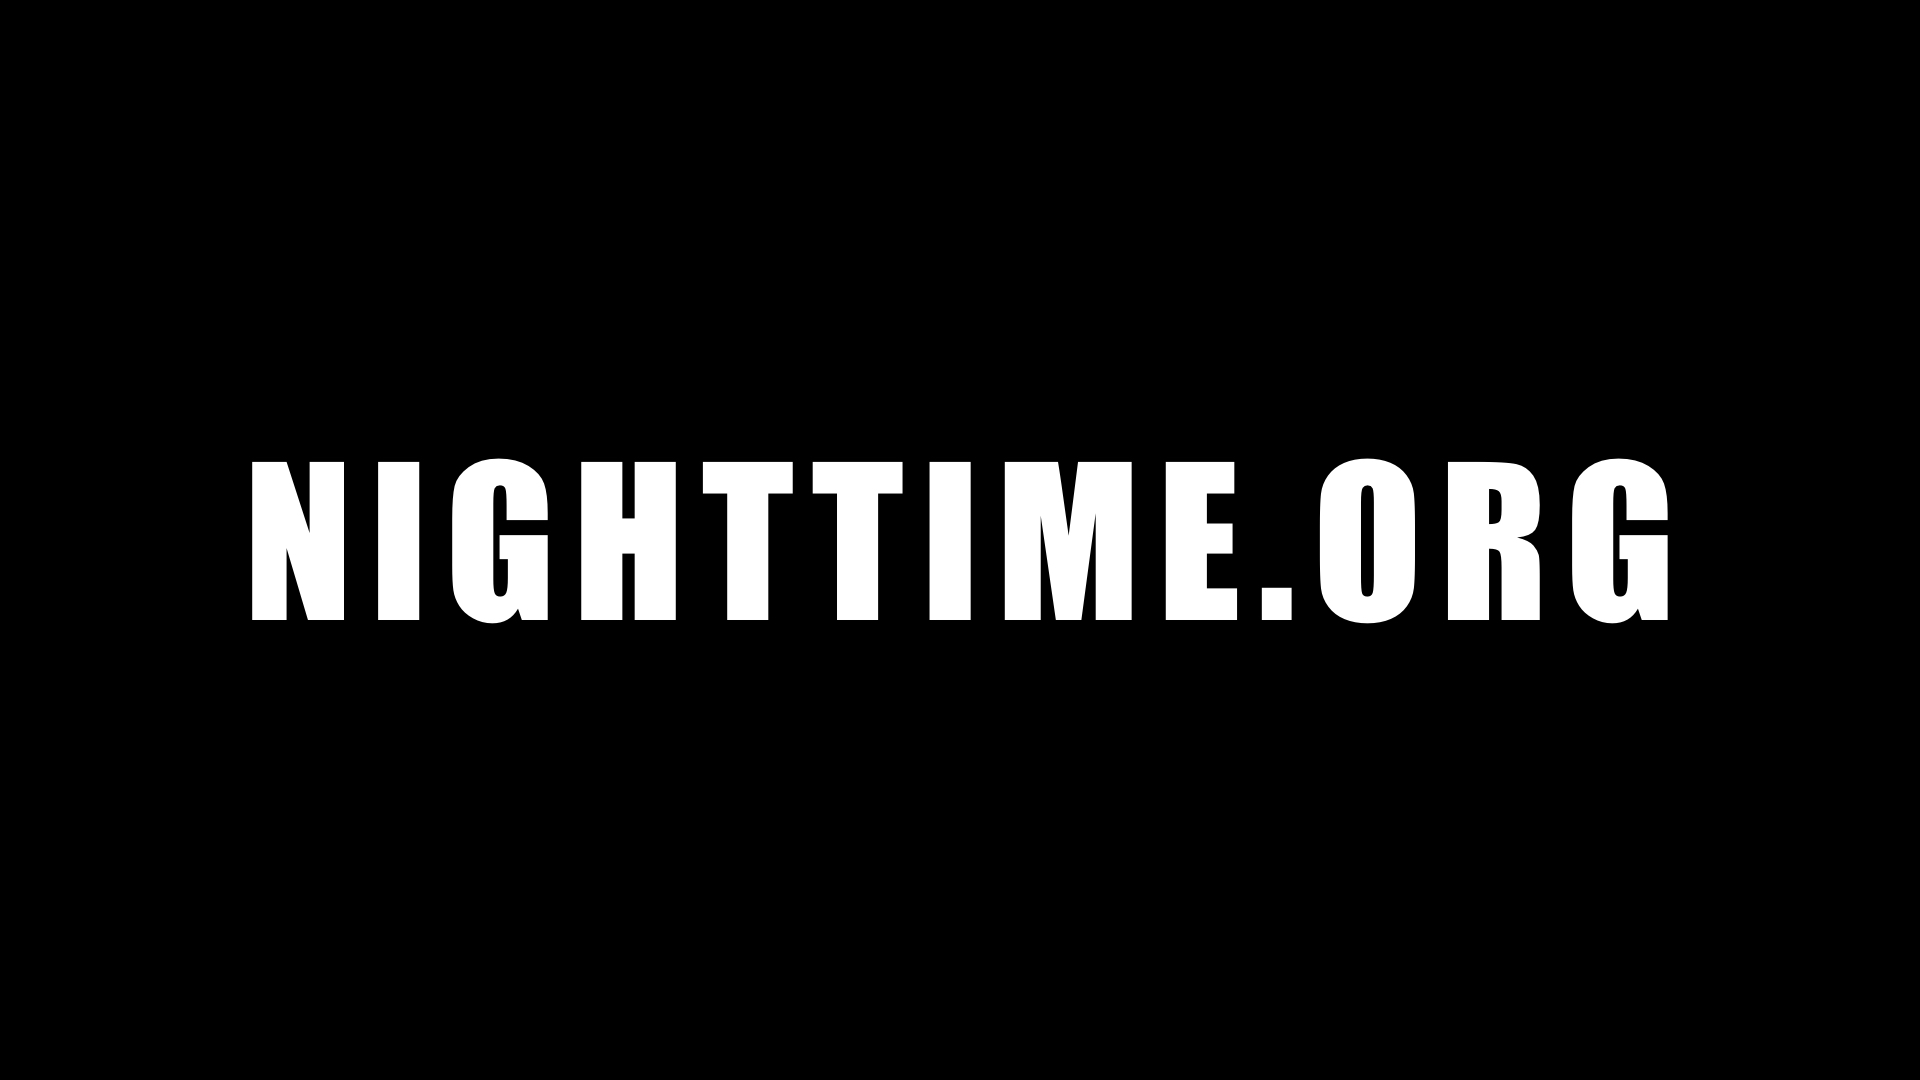 www.nighttime.org